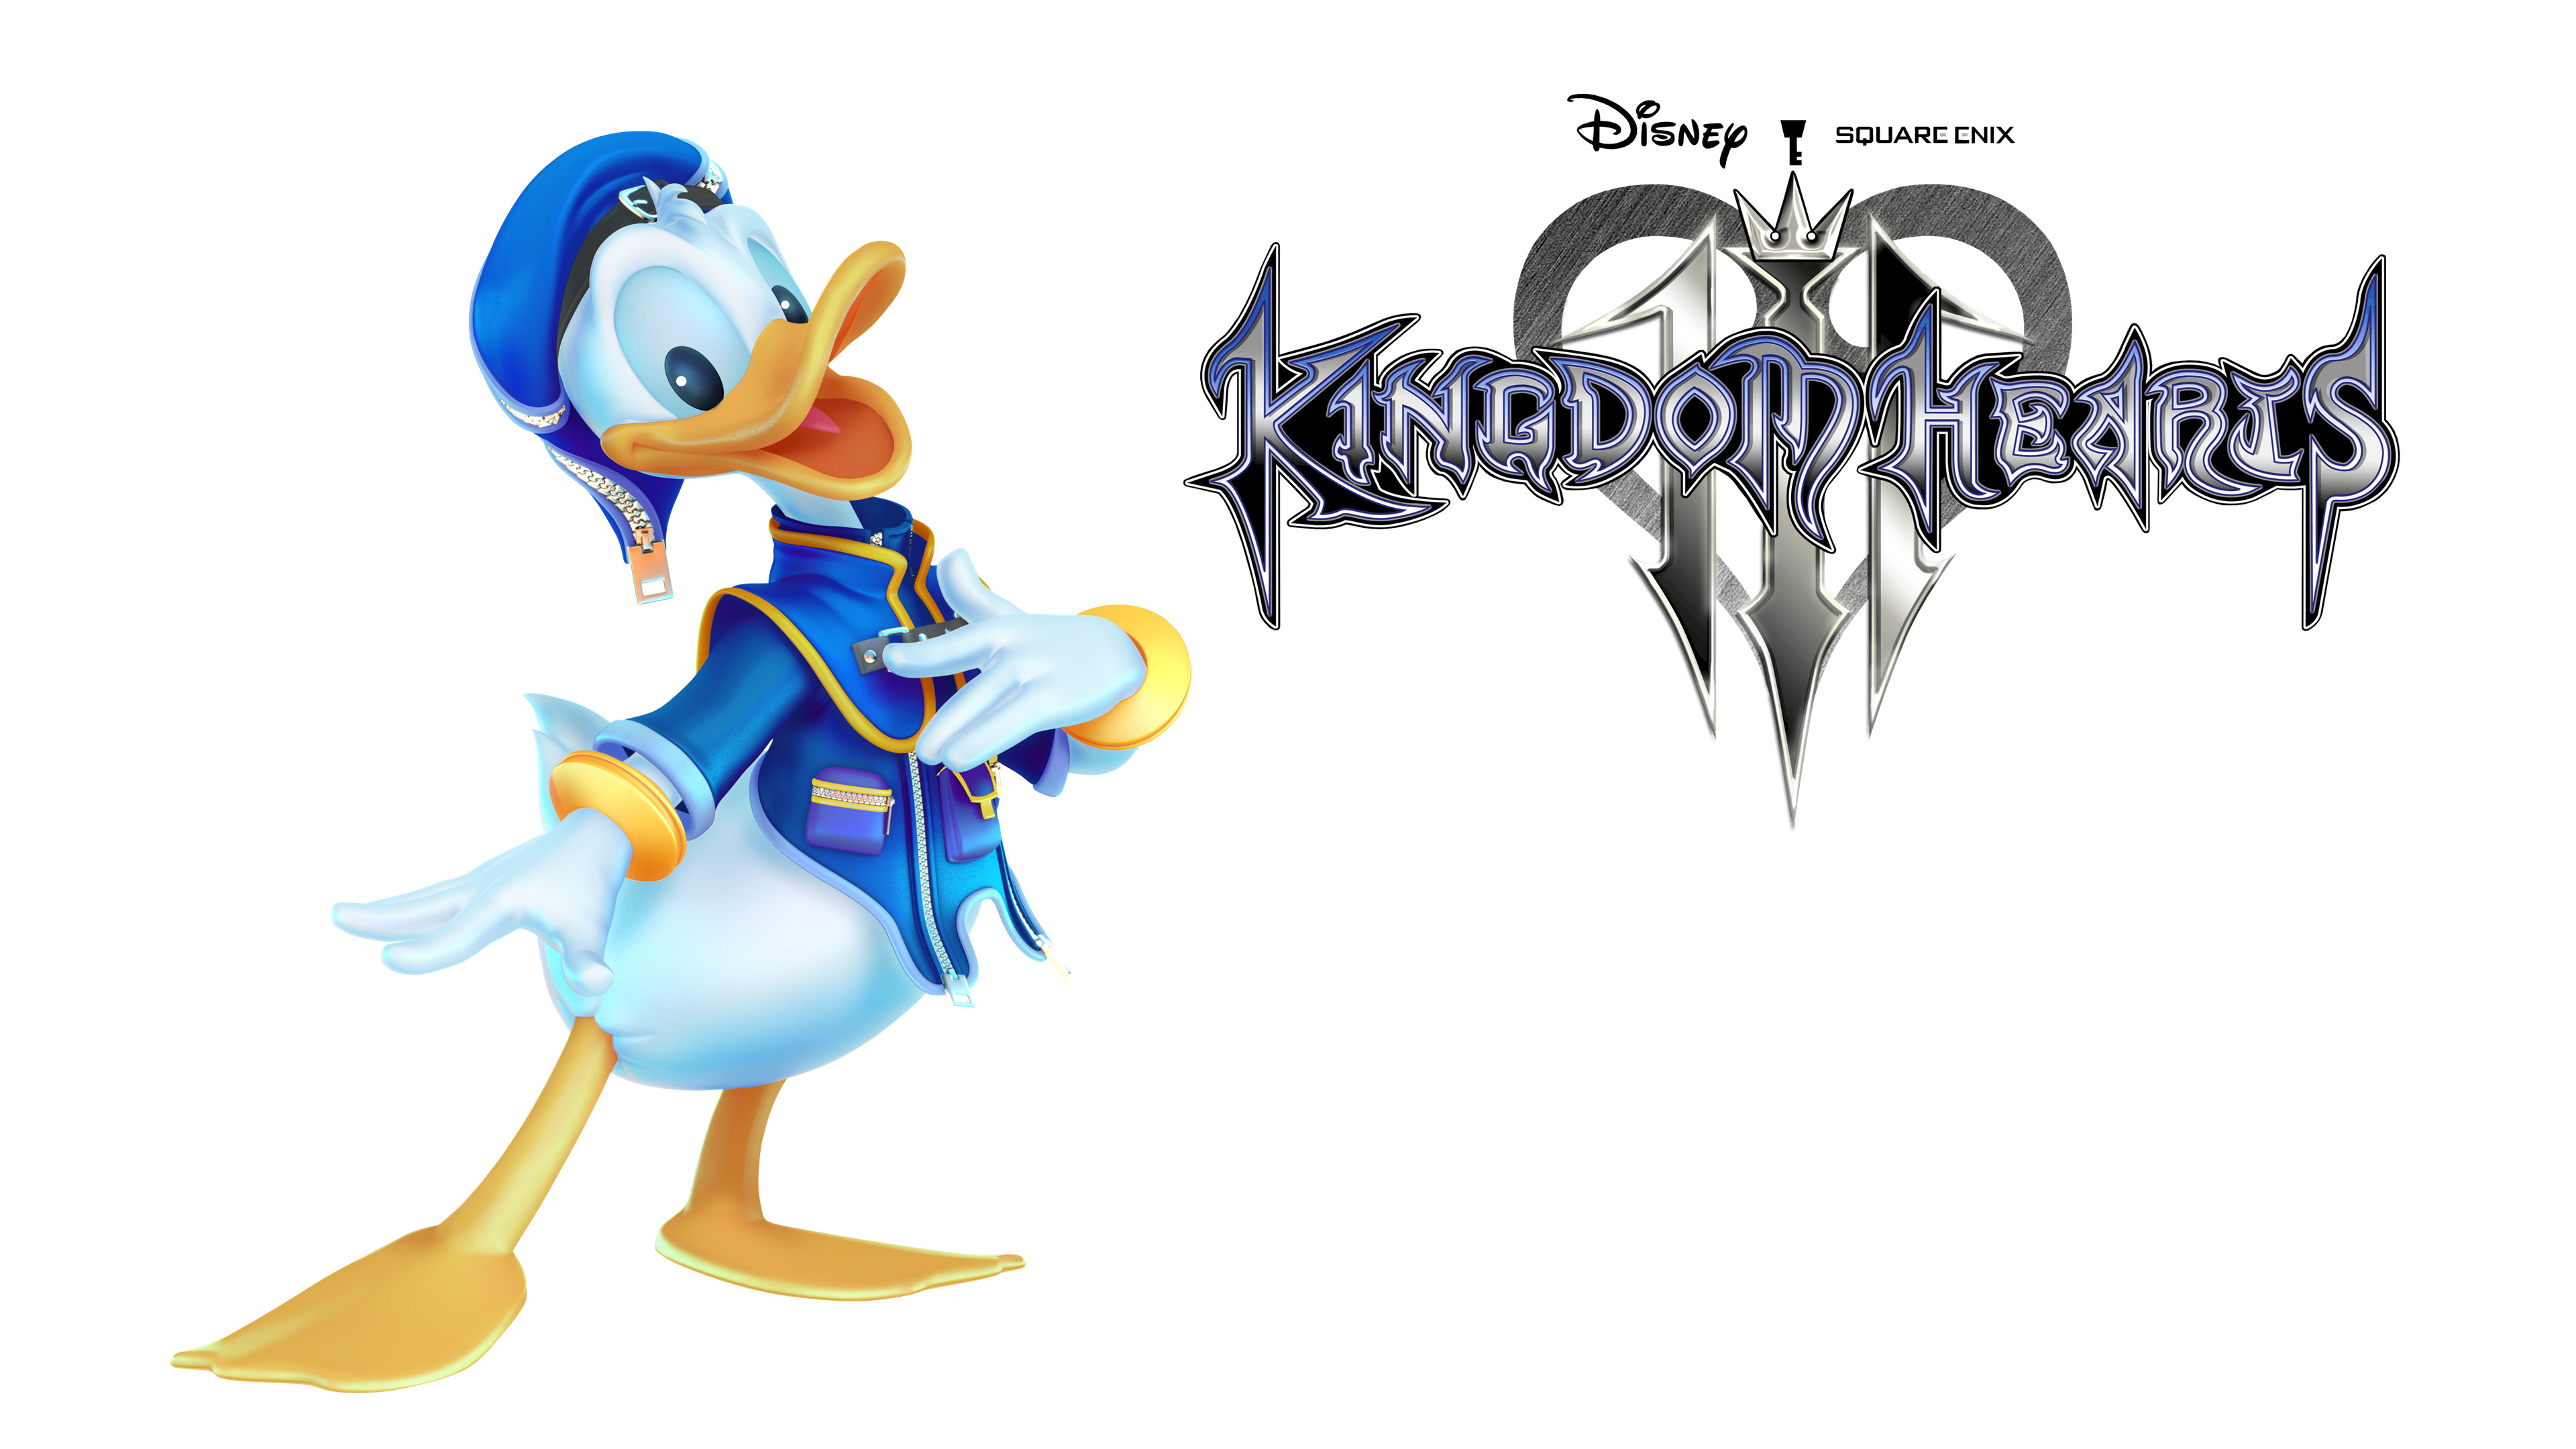 3840x2160 ... Kingdom Hearts III [Wallpaper] - Donald Duck by Caprice1996